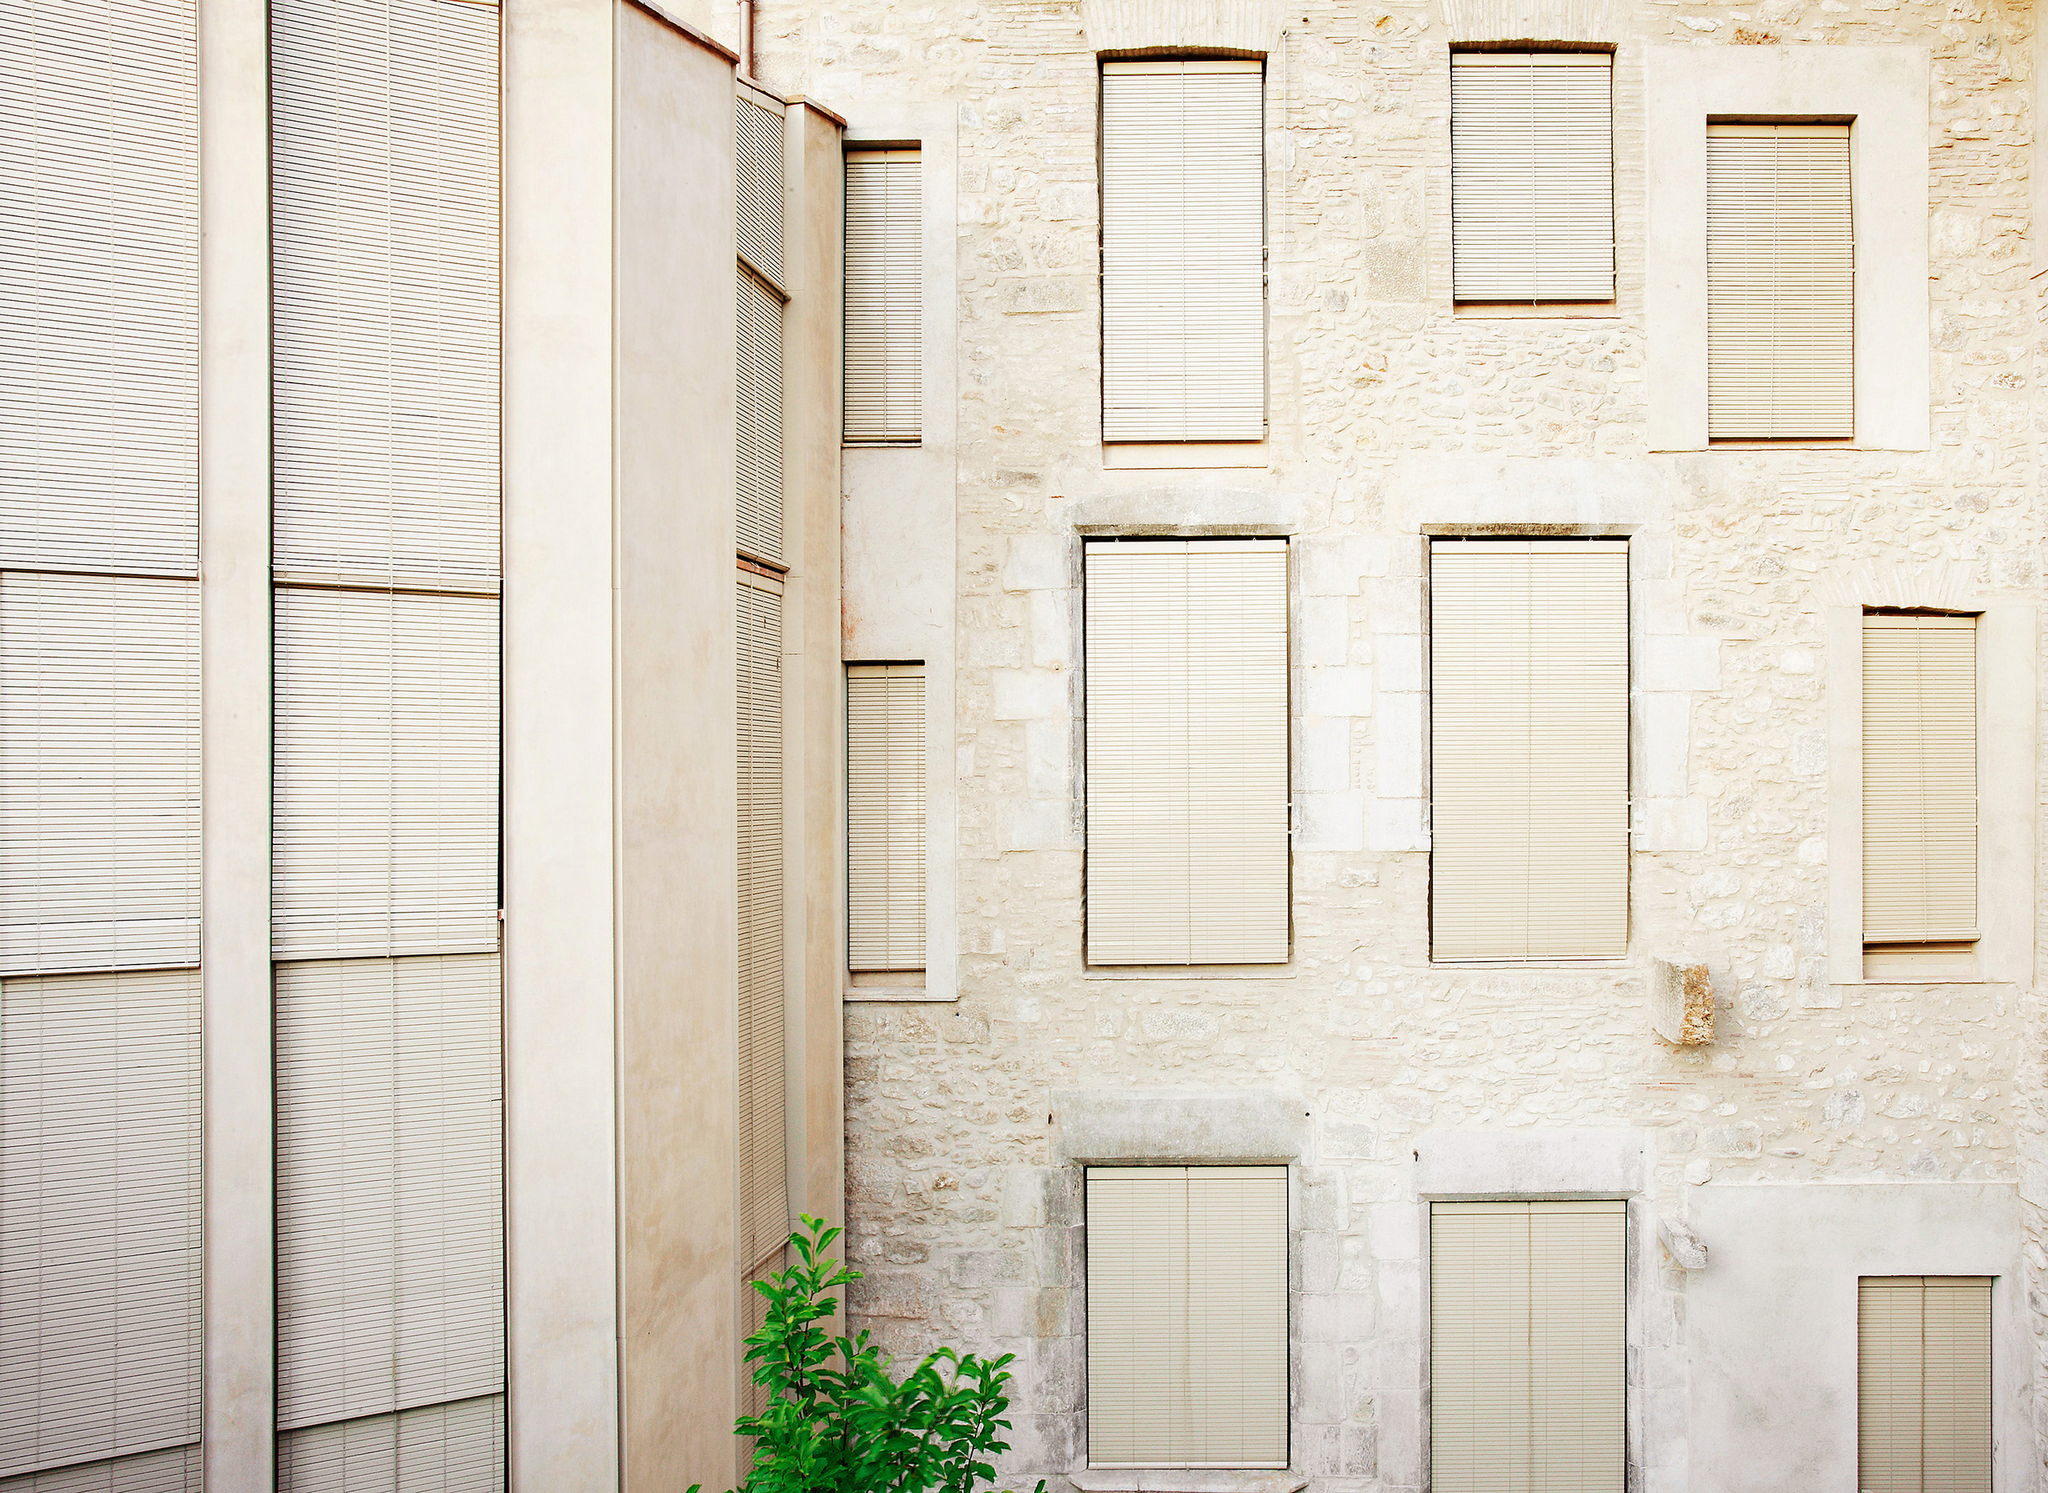 casa collage - rehabilitación de un edificio de viviendas en el centro histórico de Girona